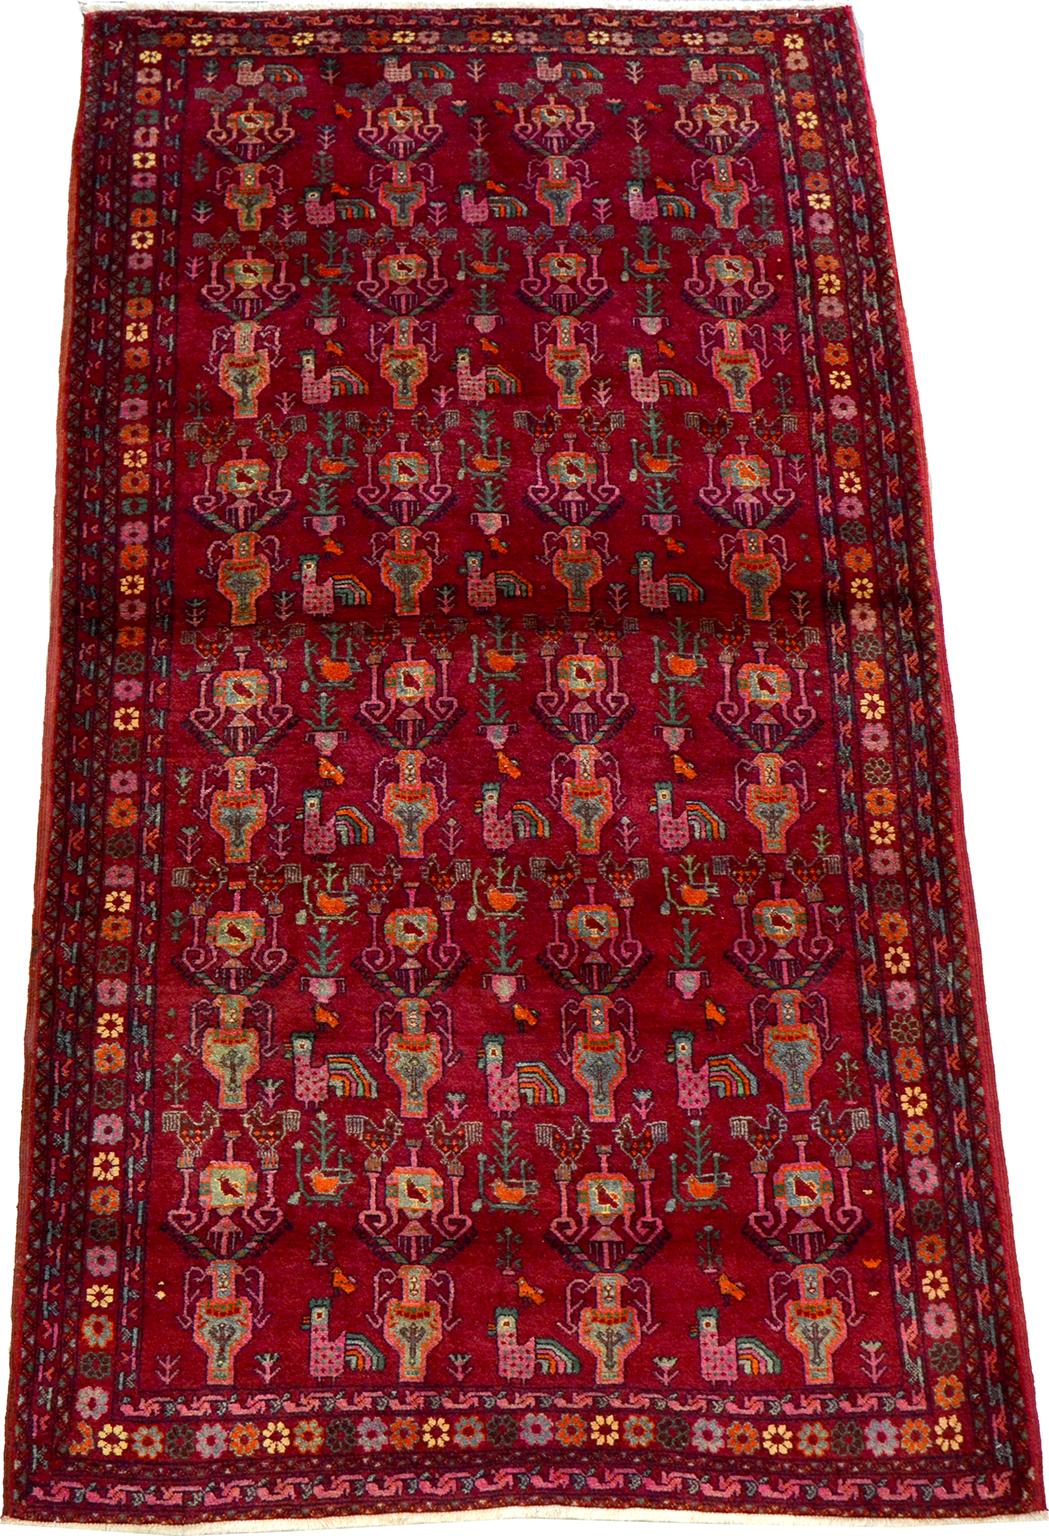 Vintage 1940s Wool Persian Belouchi Rug, Peacock Design, 5' x 9' For Sale 1